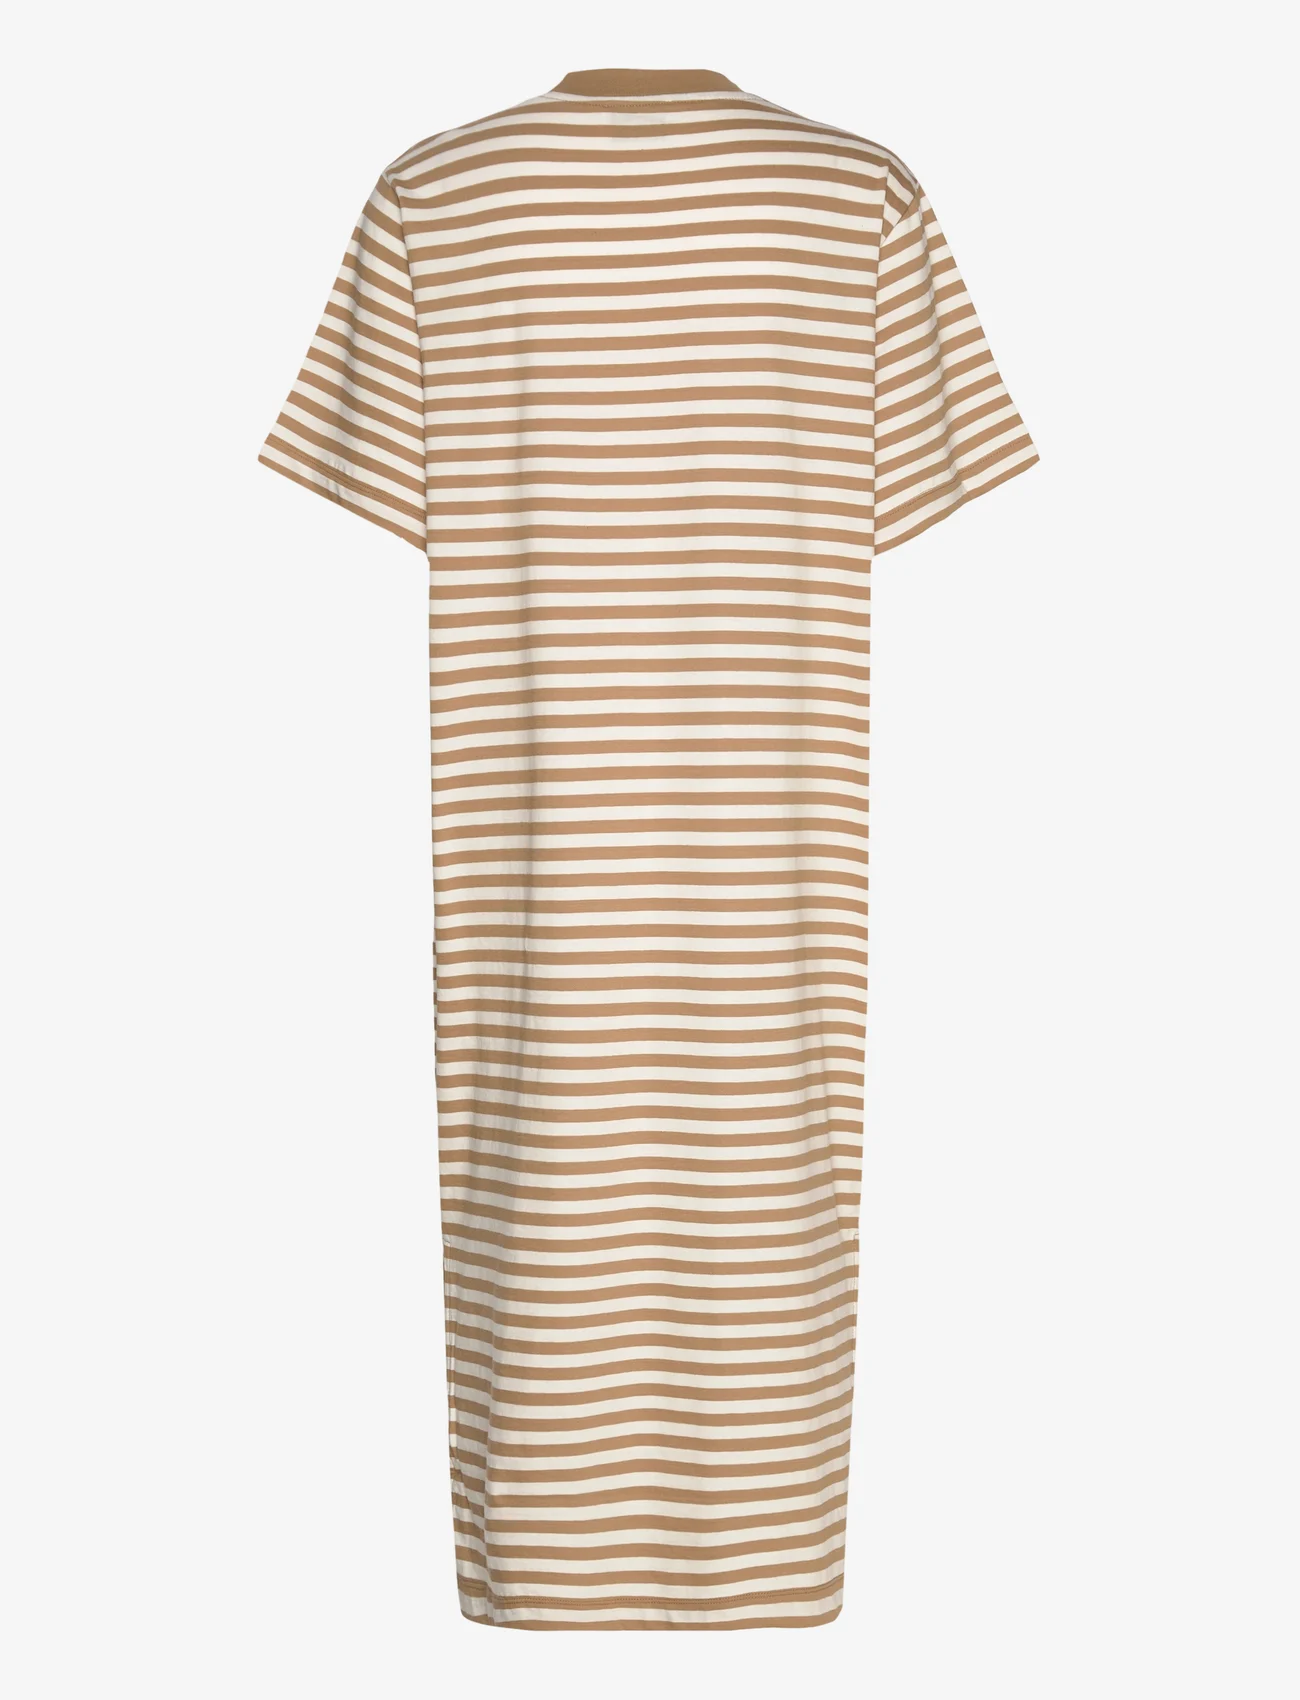 Mads Nørgaard - Single Organic Stripe Nou Dress - t-shirt dresses - kelp/cloud dancer - 1